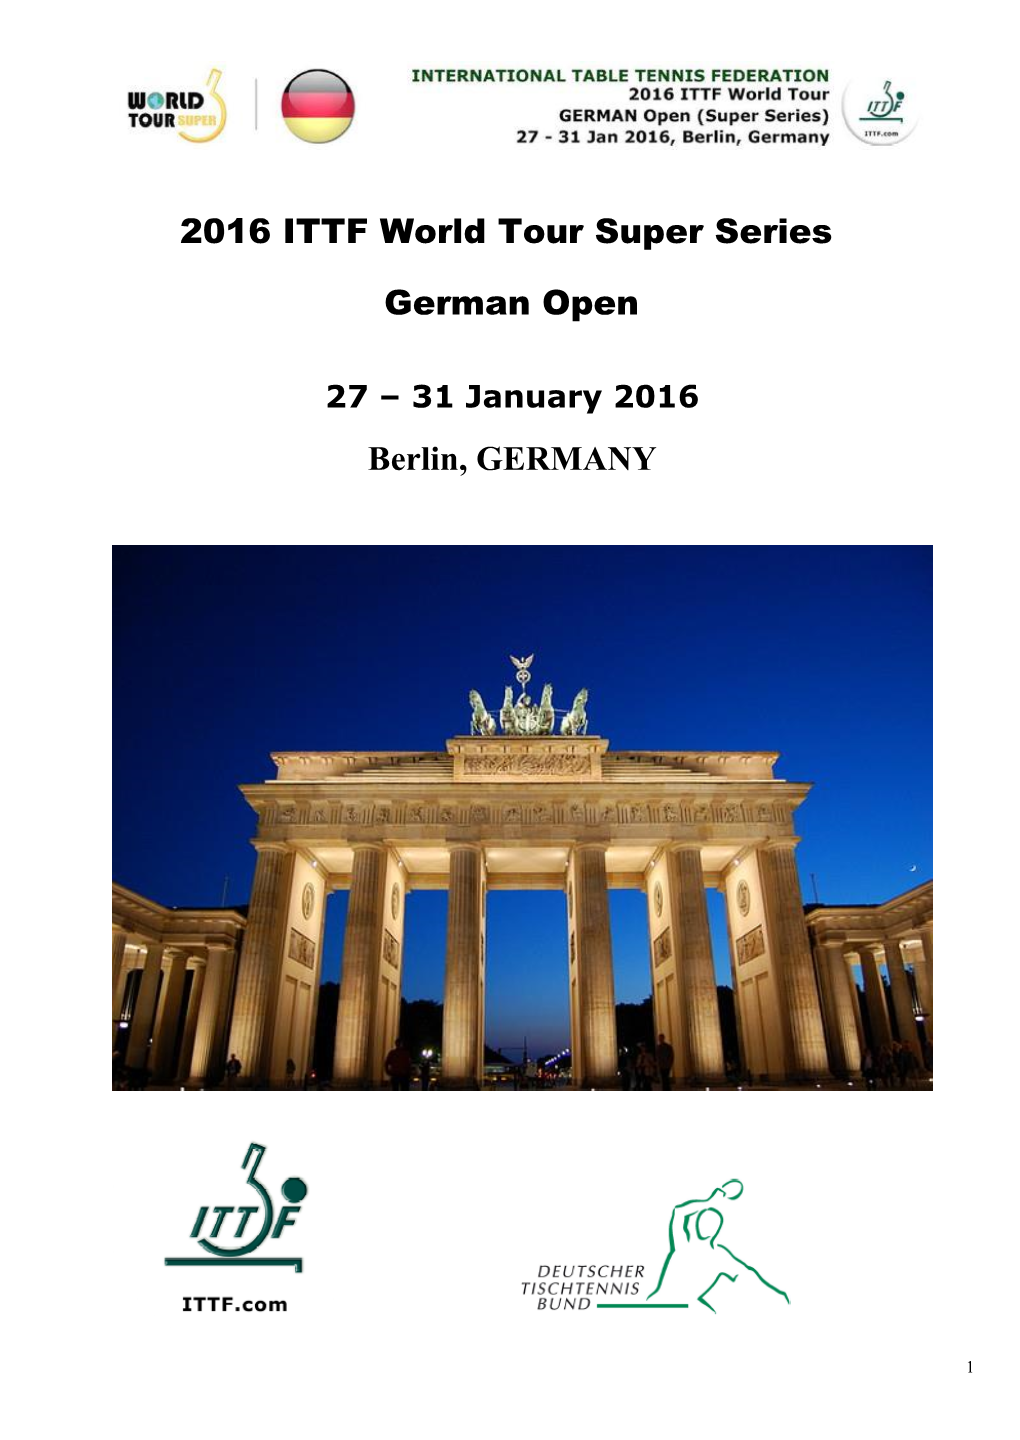 2016 ITTF World Tour Super Series German Open Berlin, GERMANY